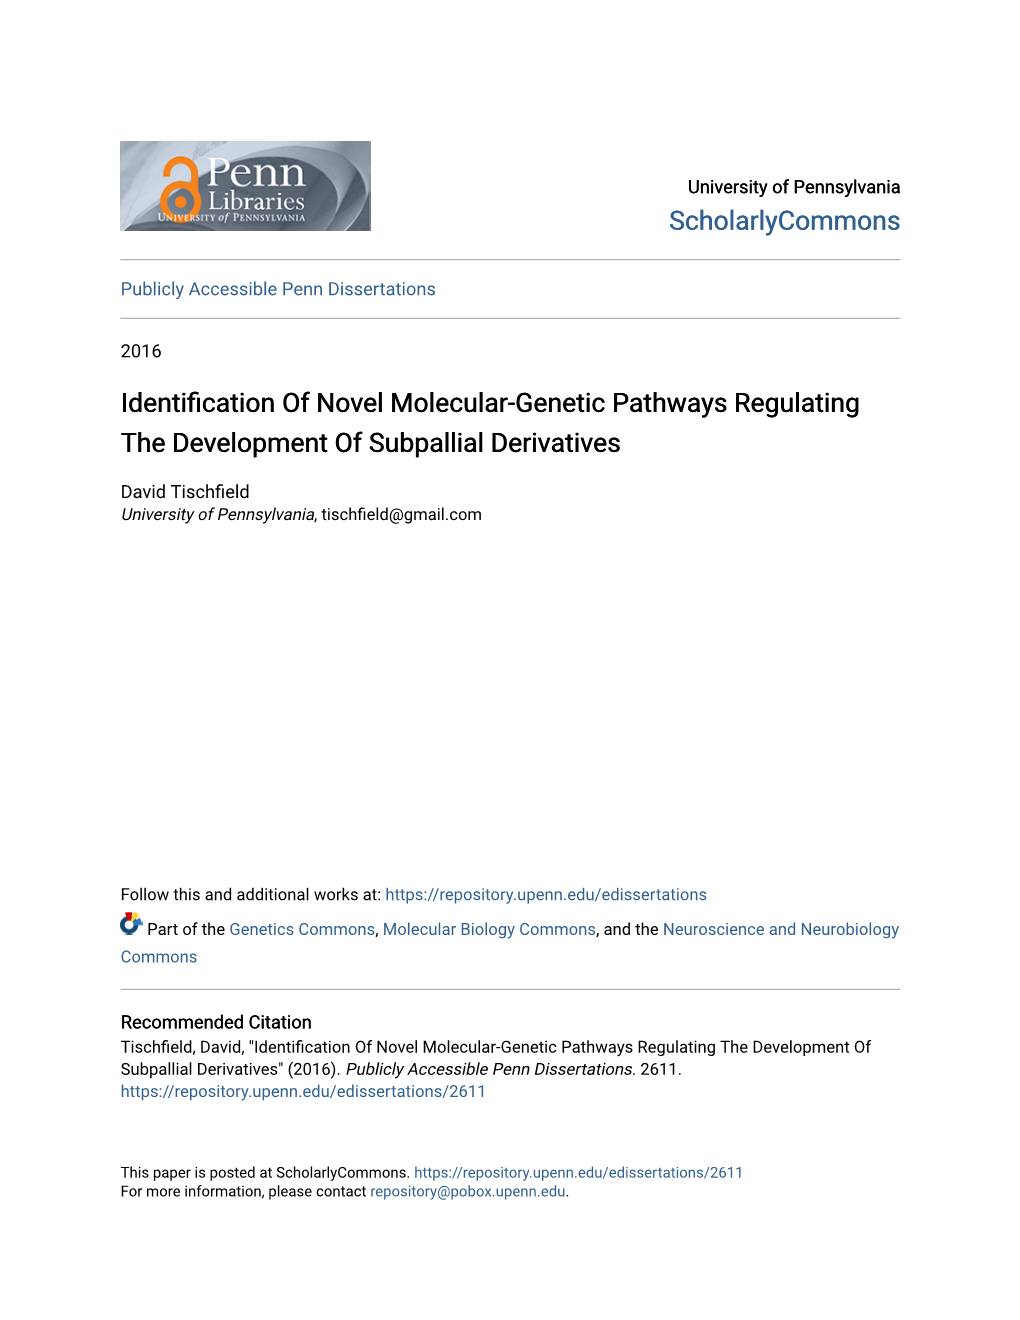 Identification of Novel Molecular-Genetic Pathways Regulating the Development of Subpallial Derivatives